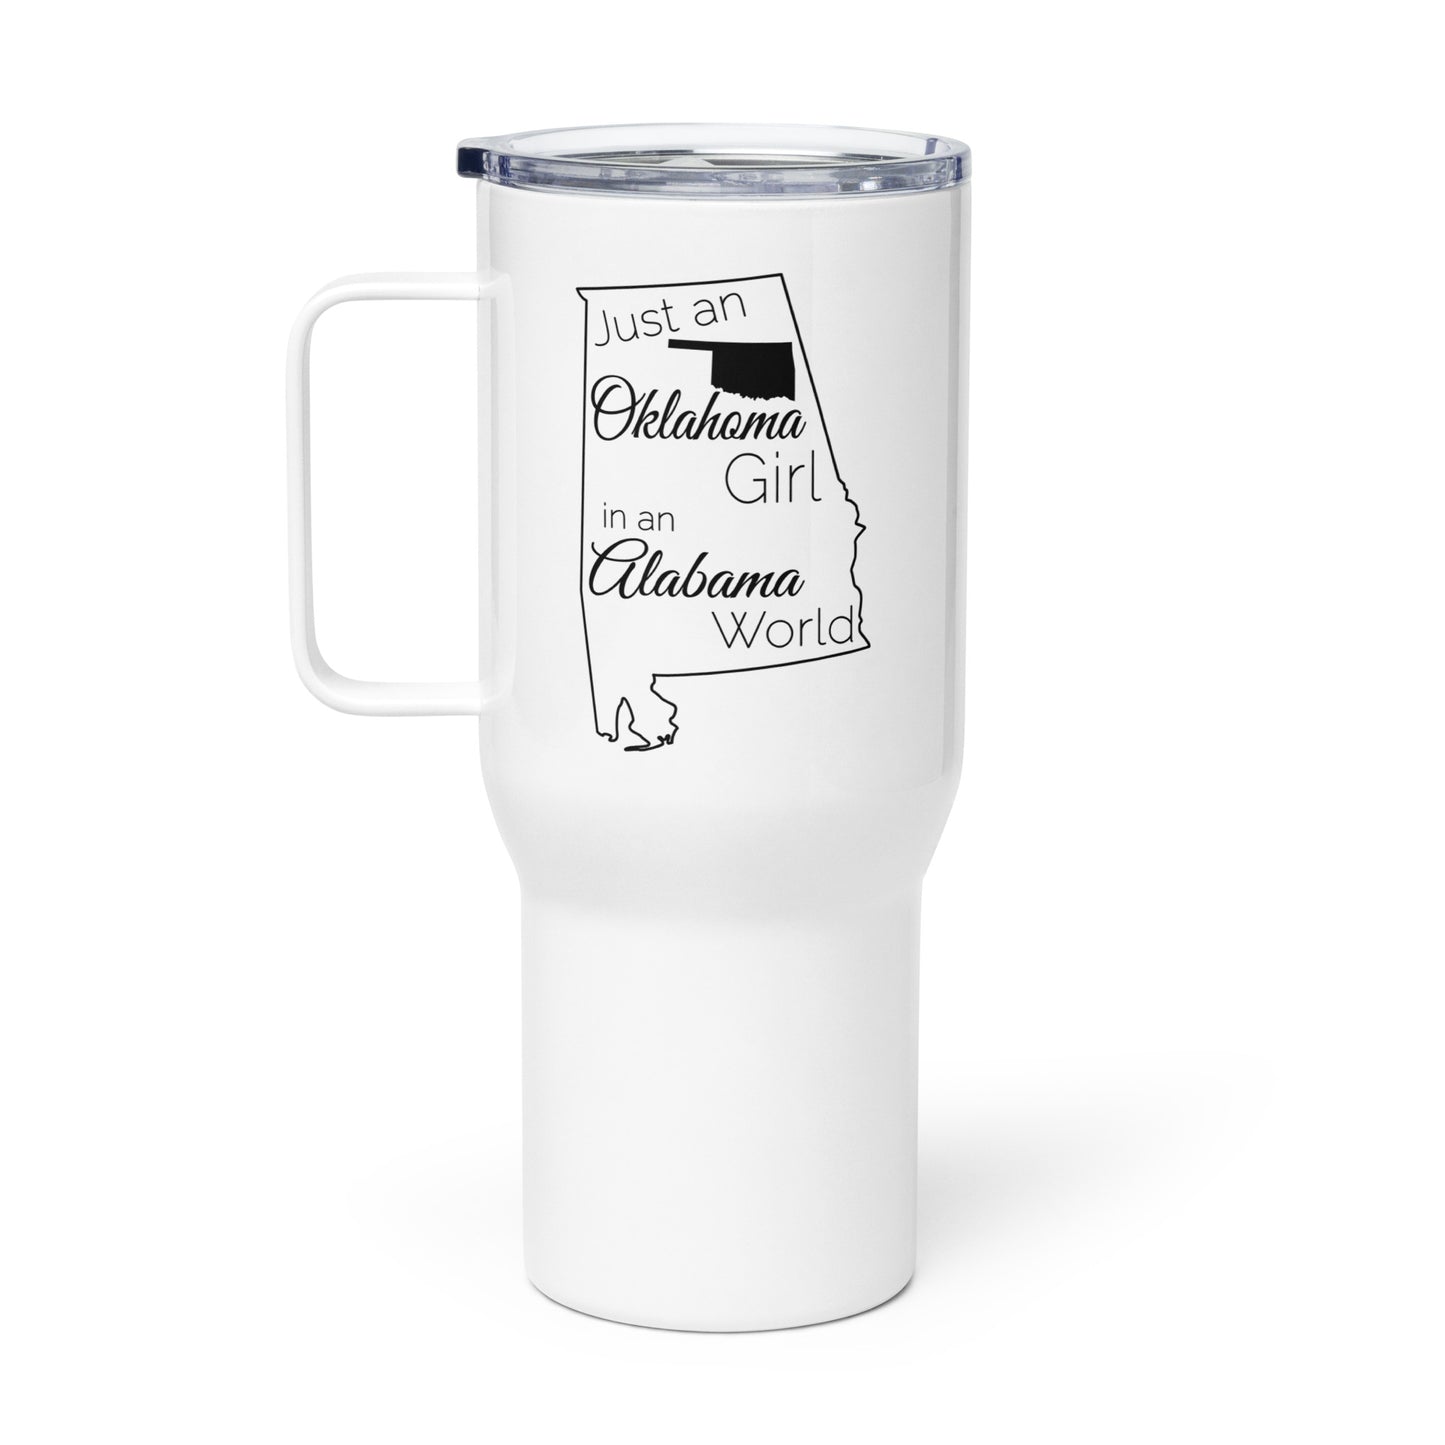 Just an Oklahoma Girl in an Alabama World Travel mug with a handle